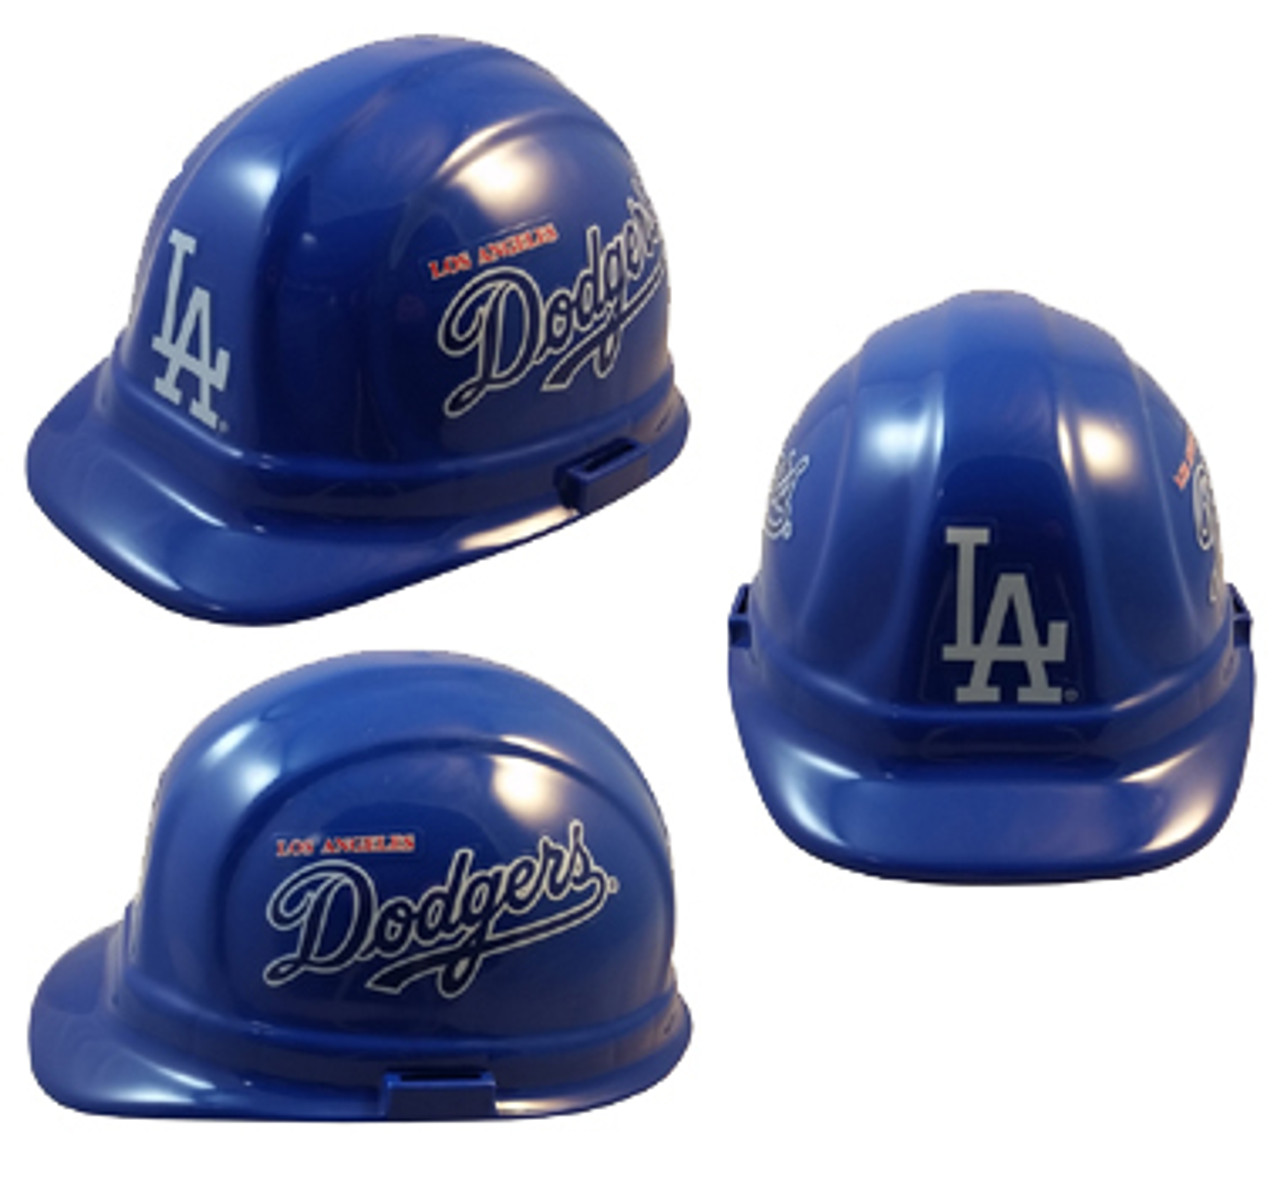  Your Fan Shop for Los Angeles Dodgers